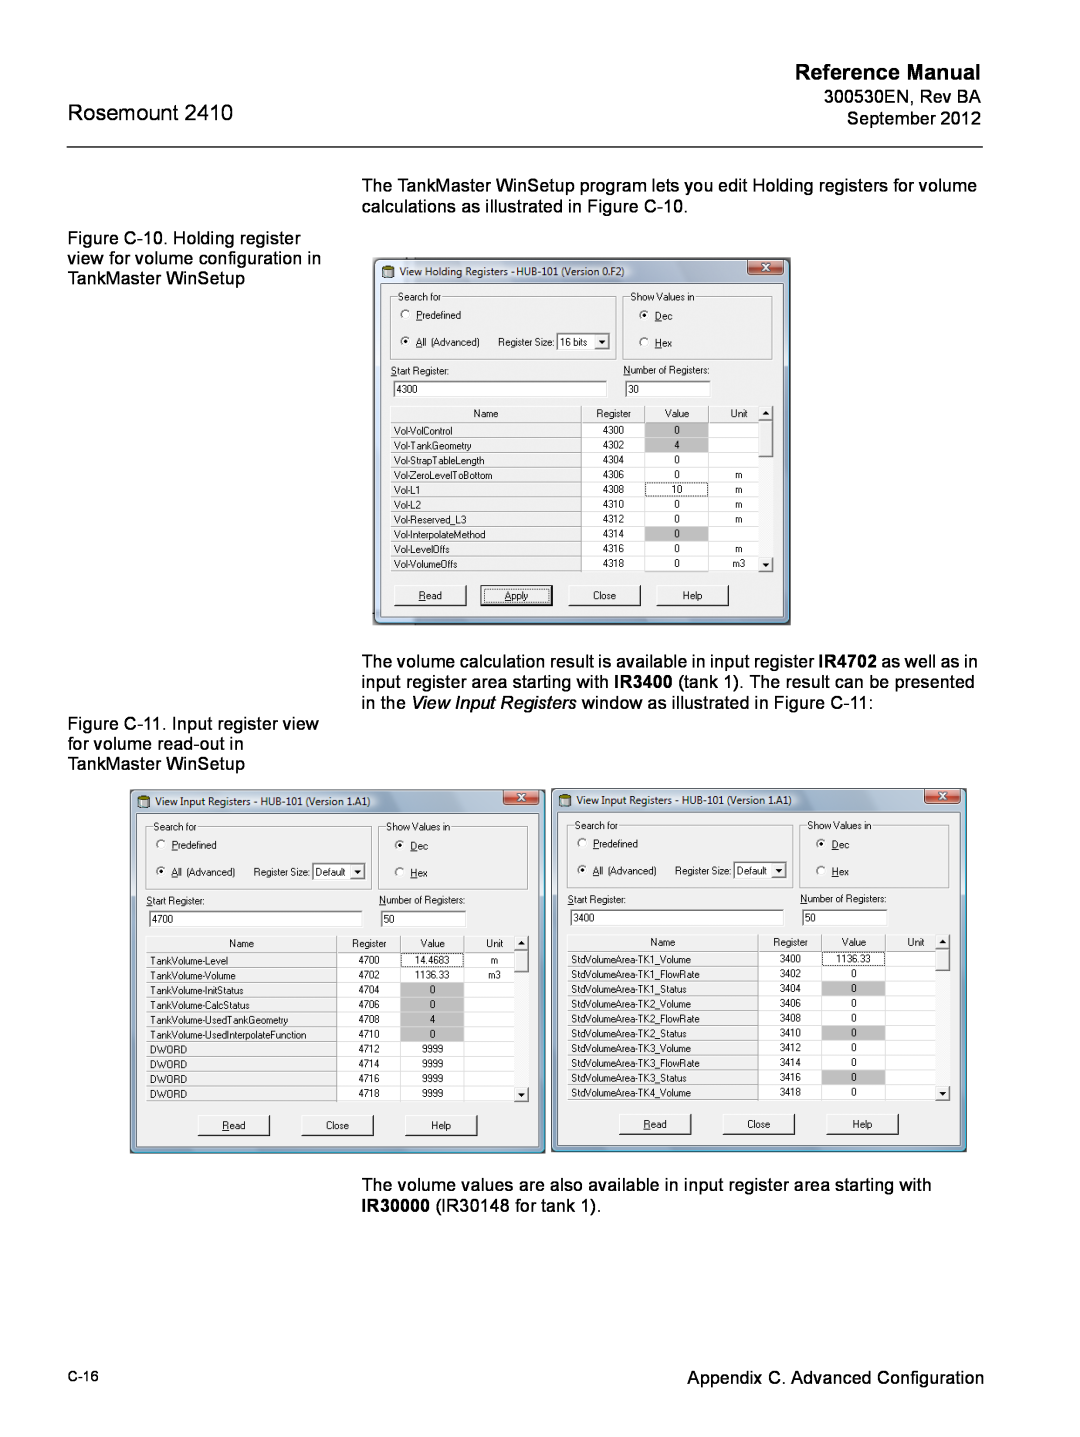 Emerson Process Management Rosemount 2410 manual Reference Manual, C-16 